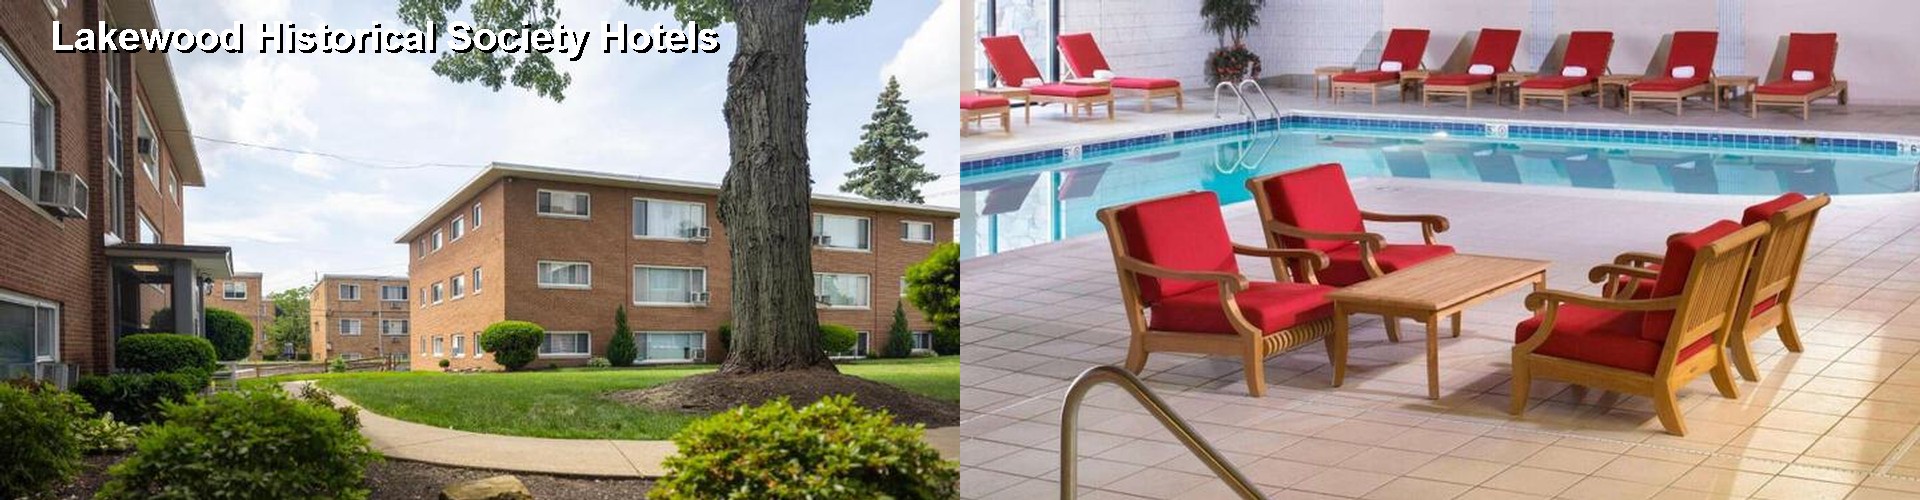 3 Best Hotels near Lakewood Historical Society